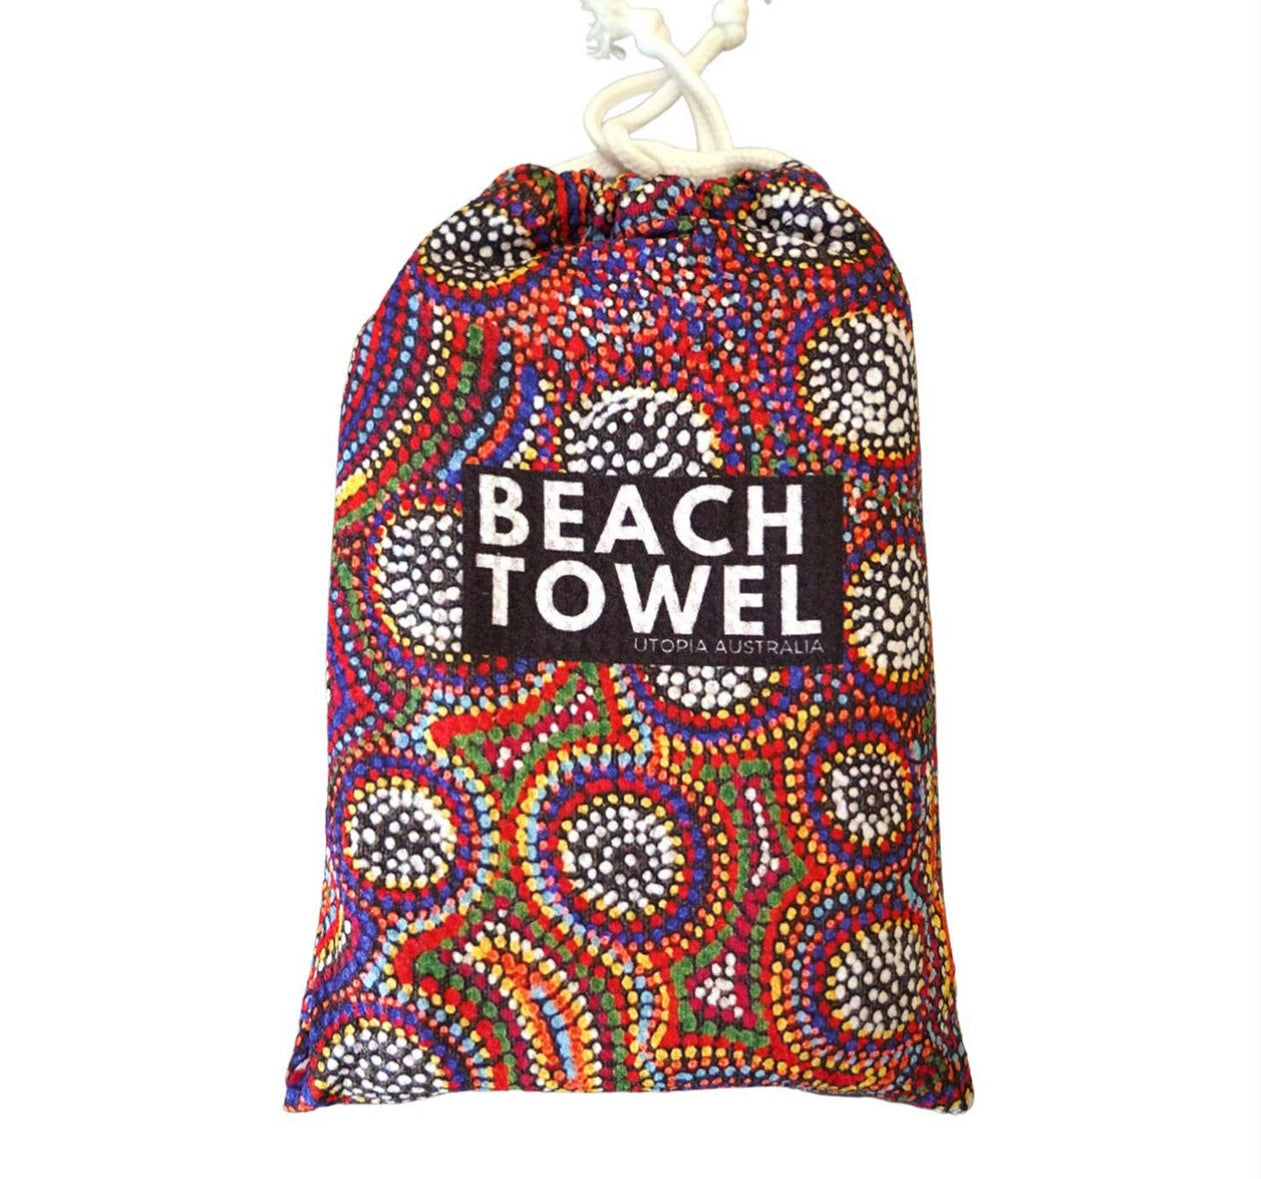 Beach Towel - Janie Petyarre Morgan